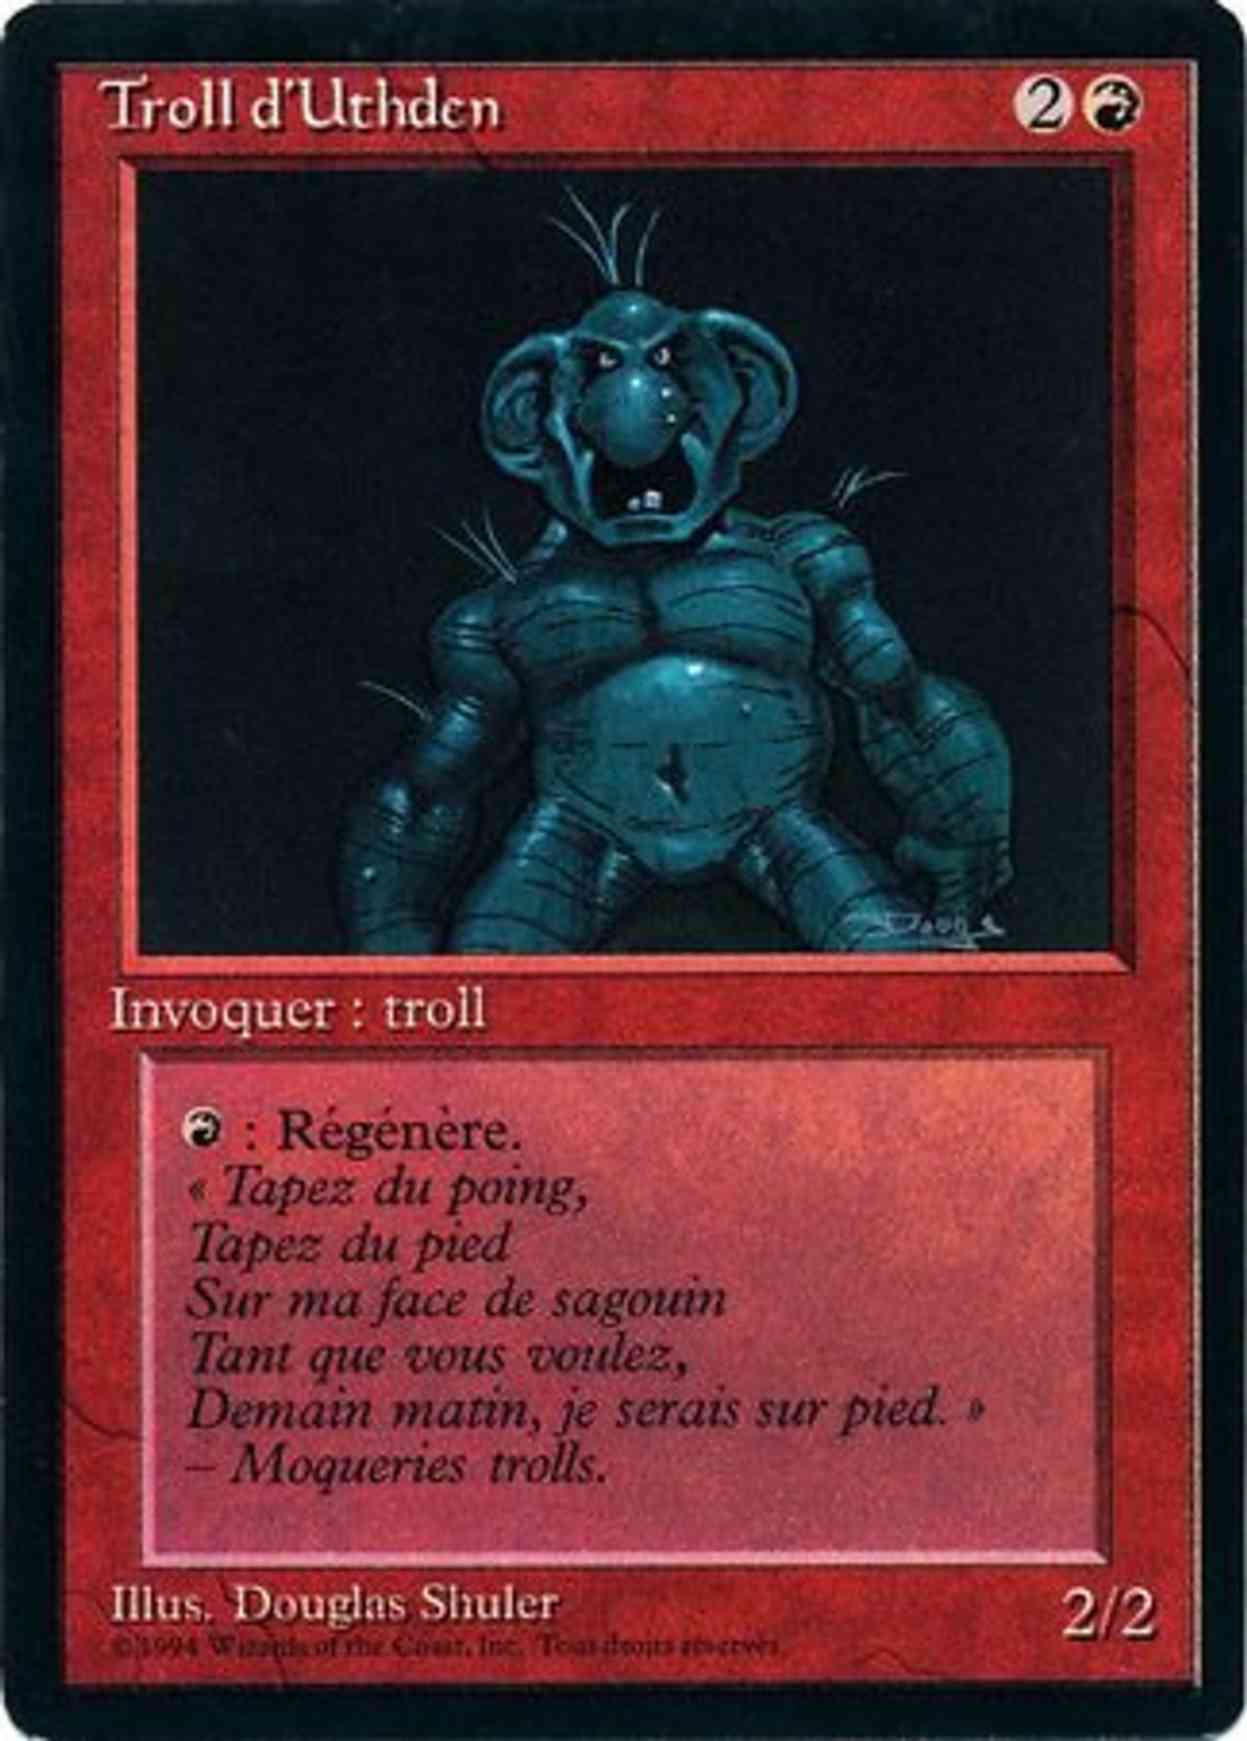 Uthden Troll magic card front